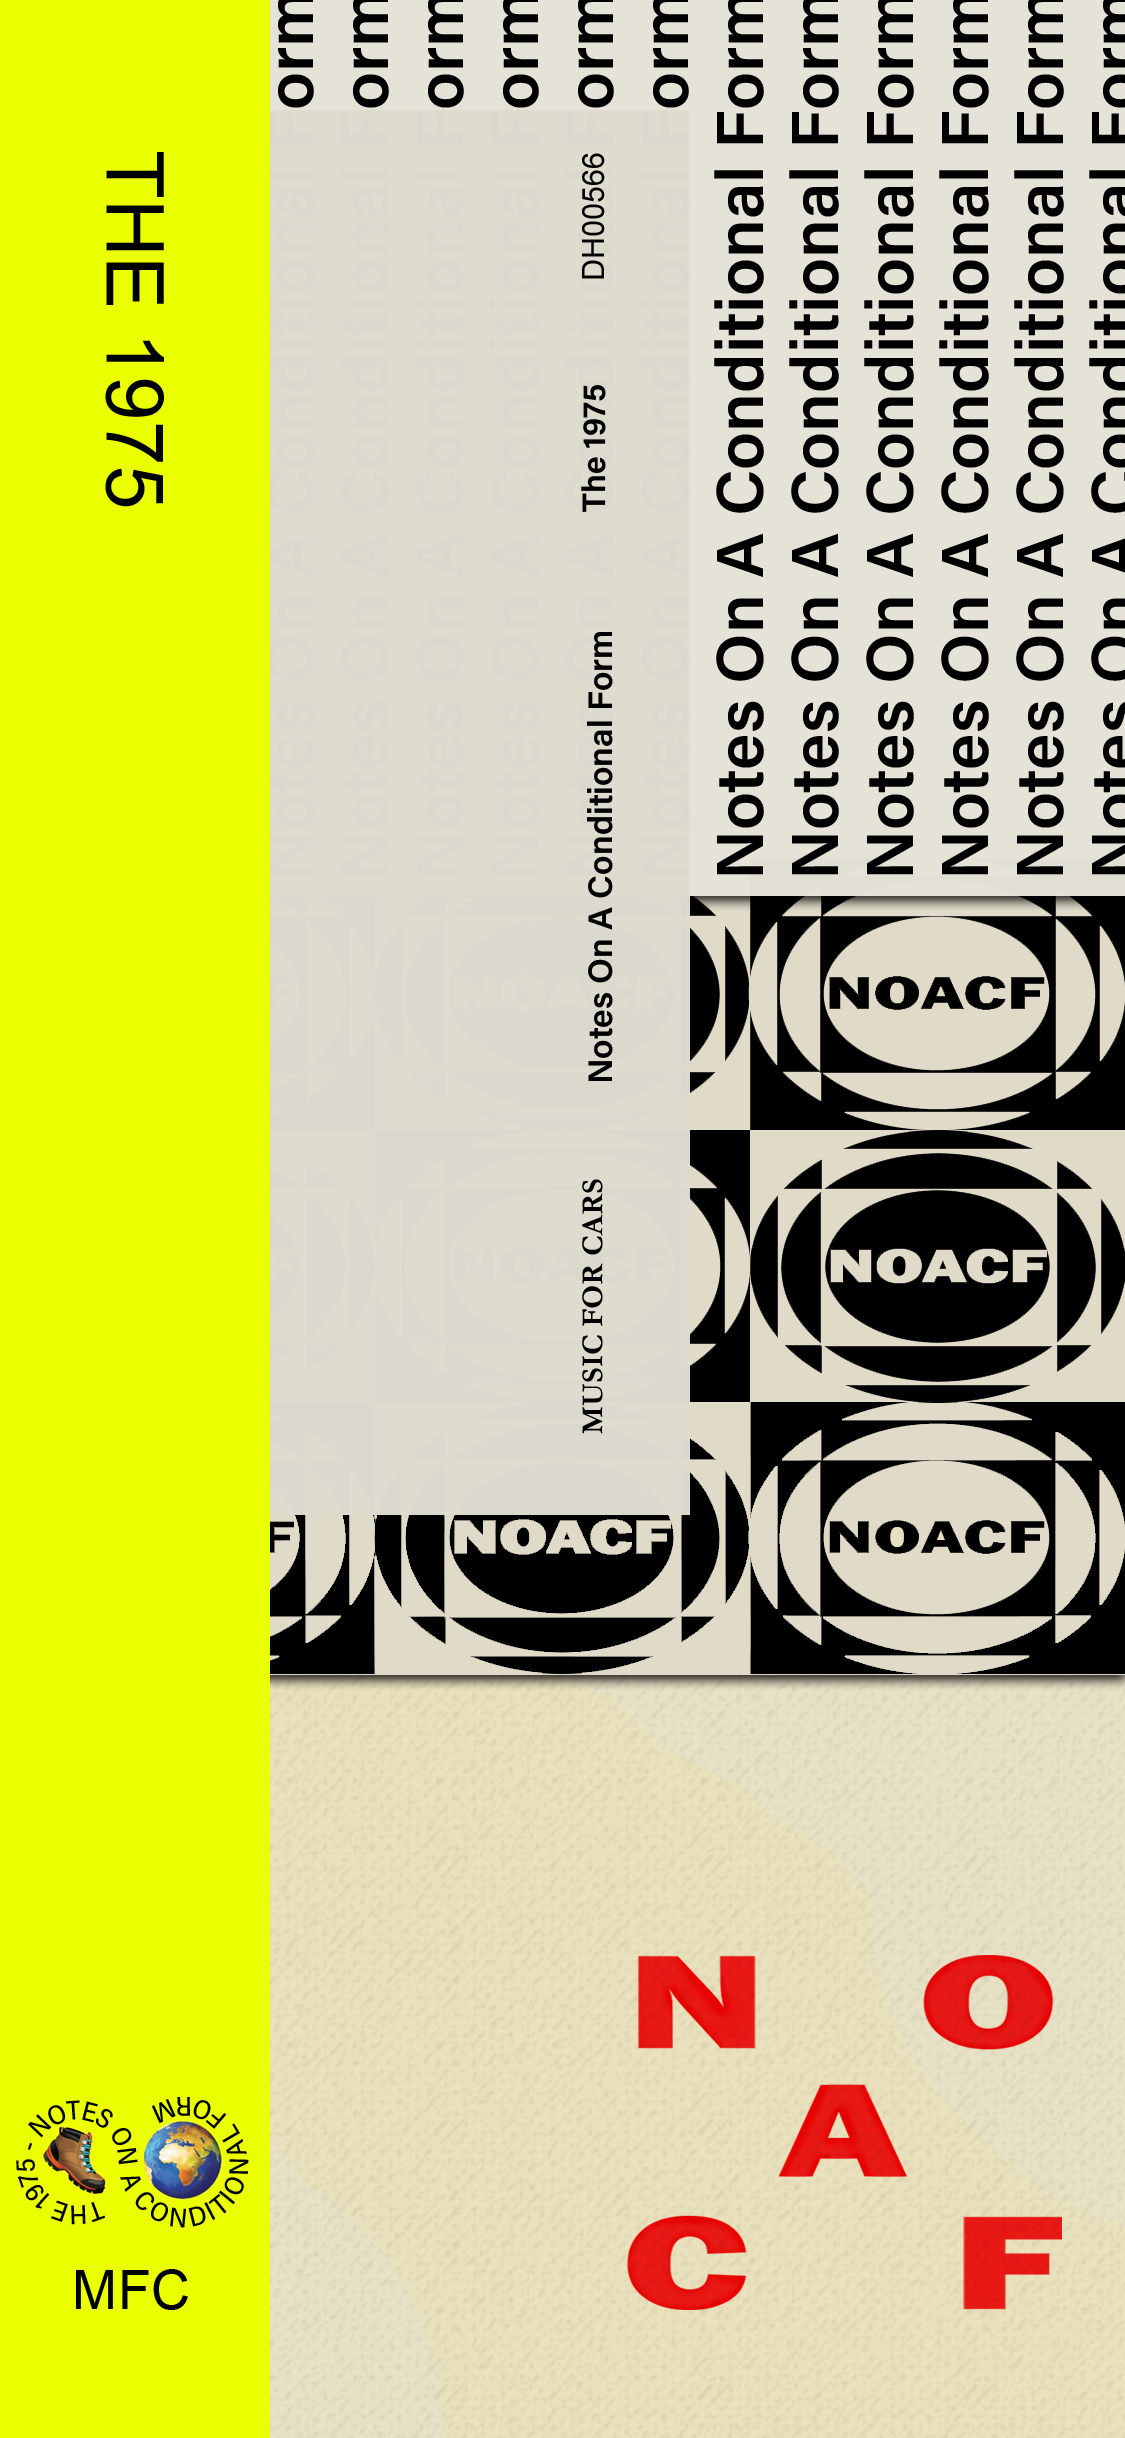 Noacf Album Recreated For Phone Wallpaper R The1975